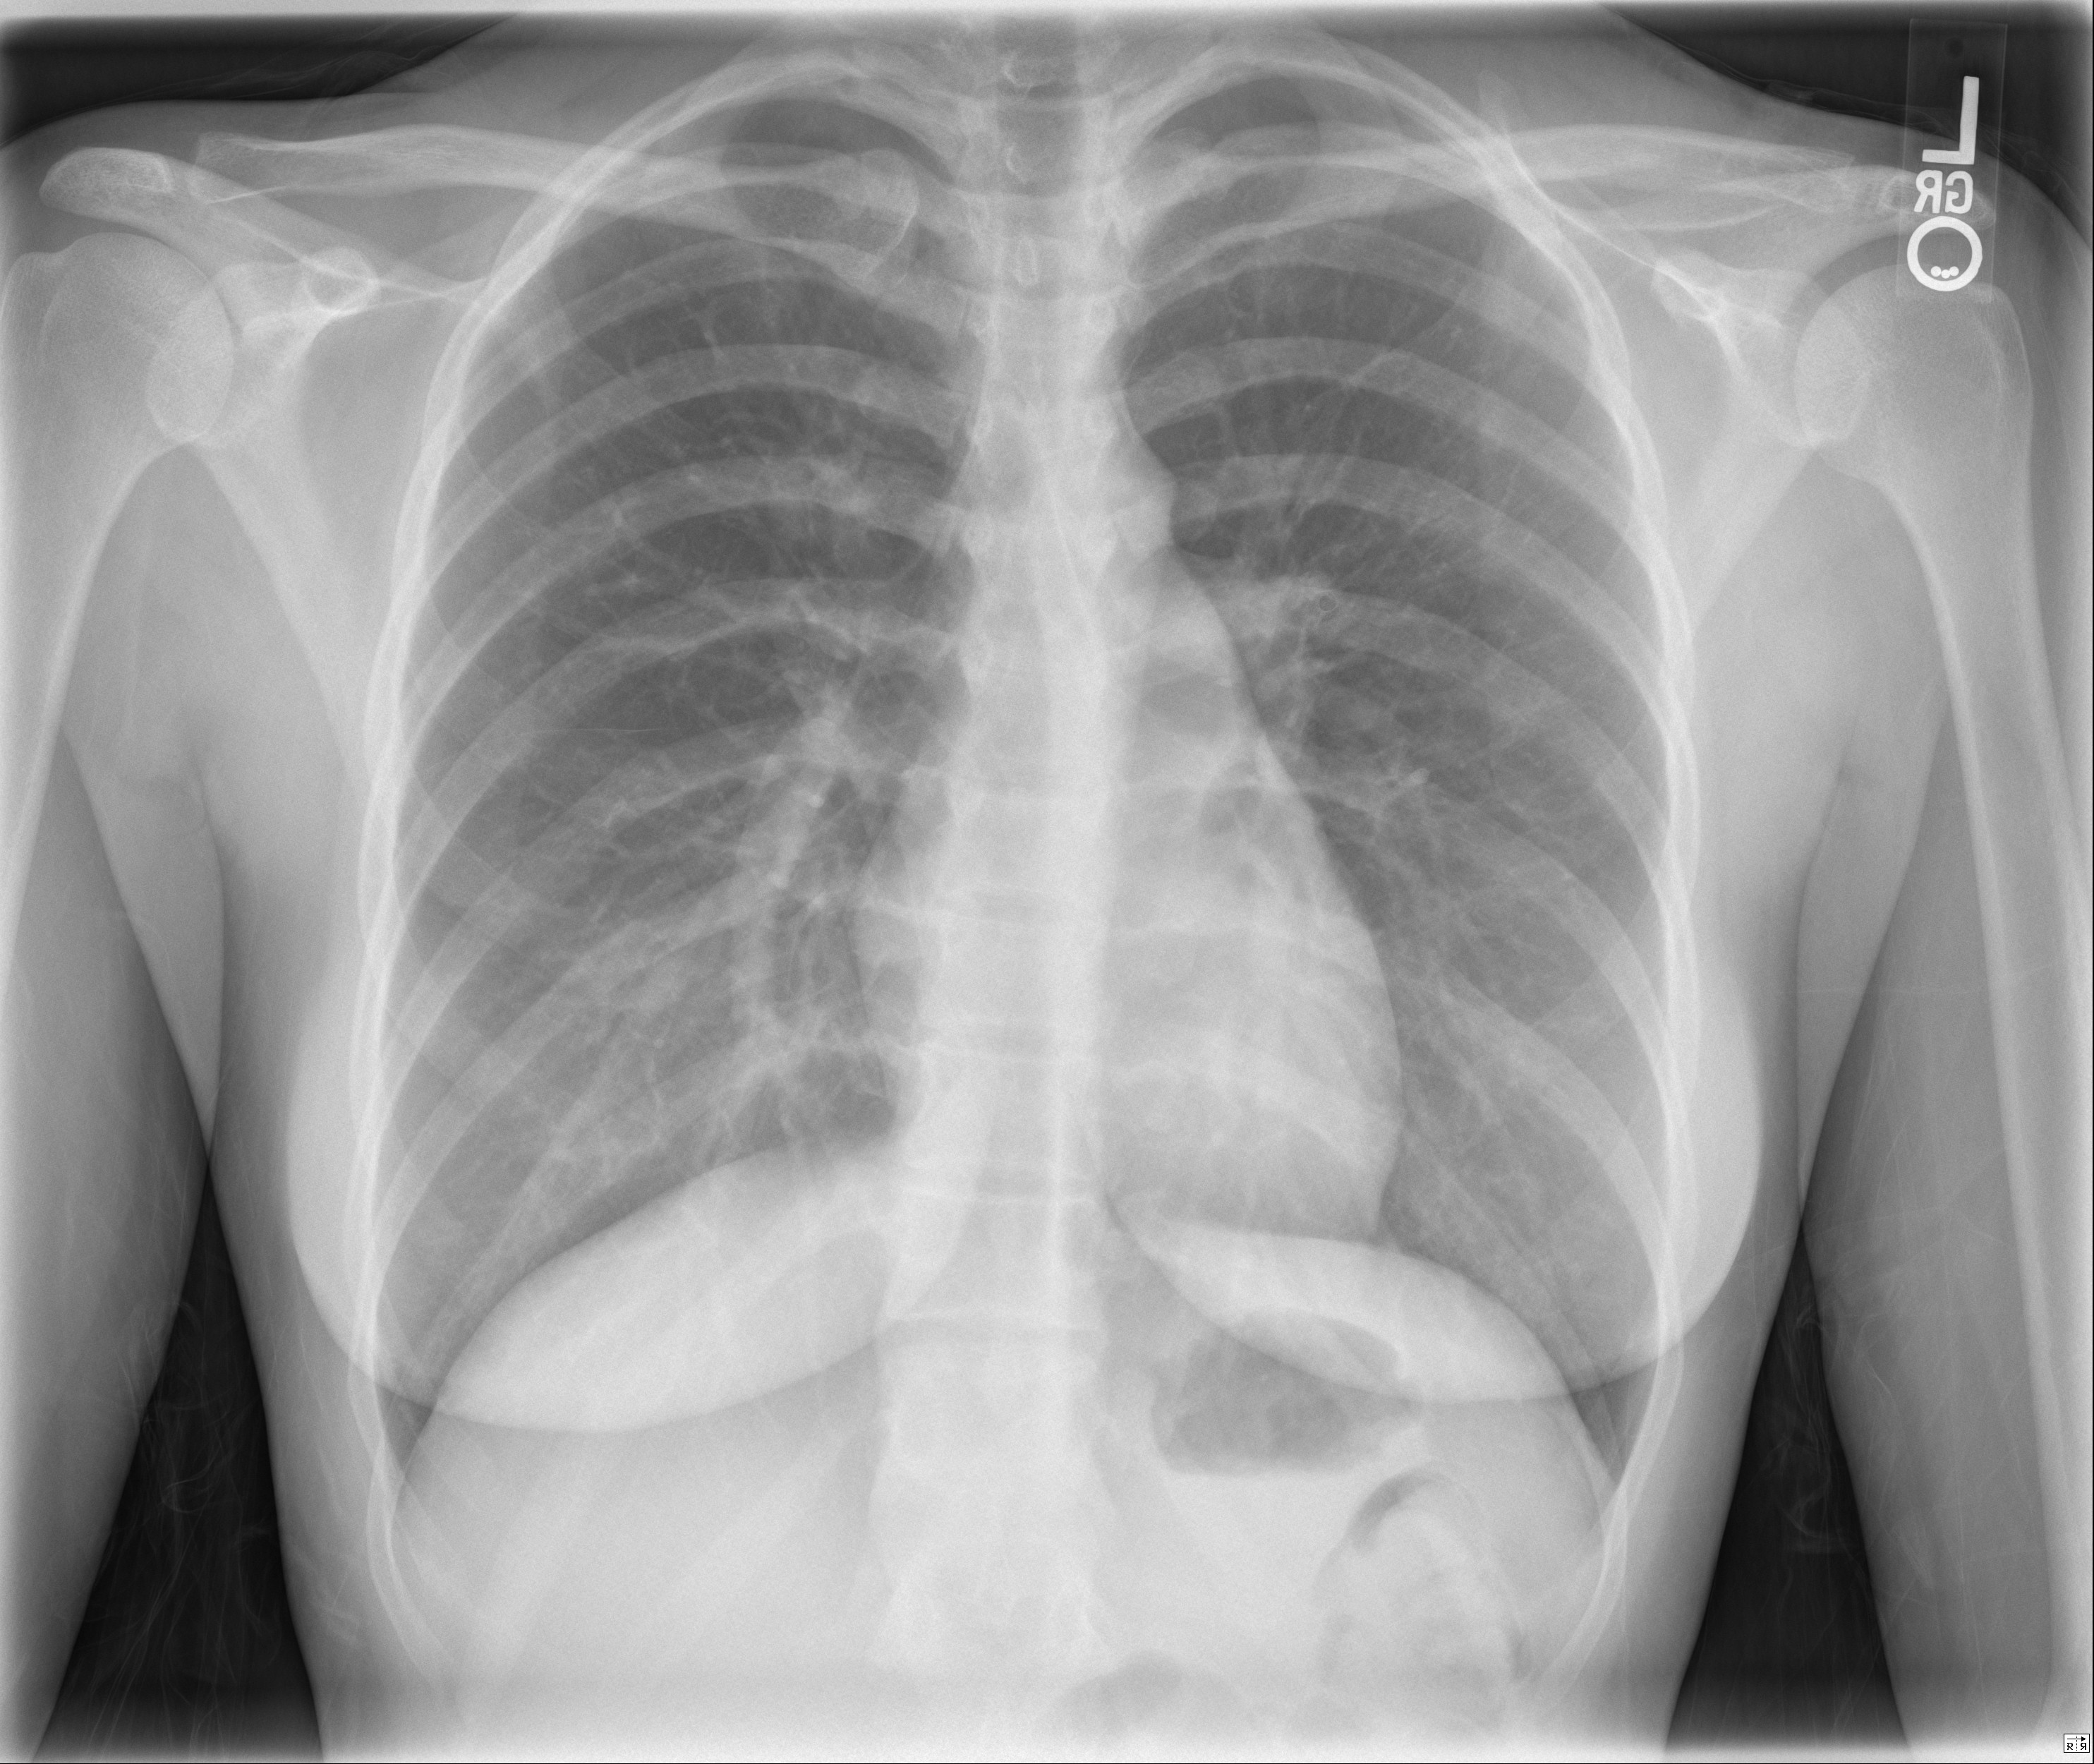 https://radiologypics.files.wordpress.com/2013/01/normal-female-chest.jpg